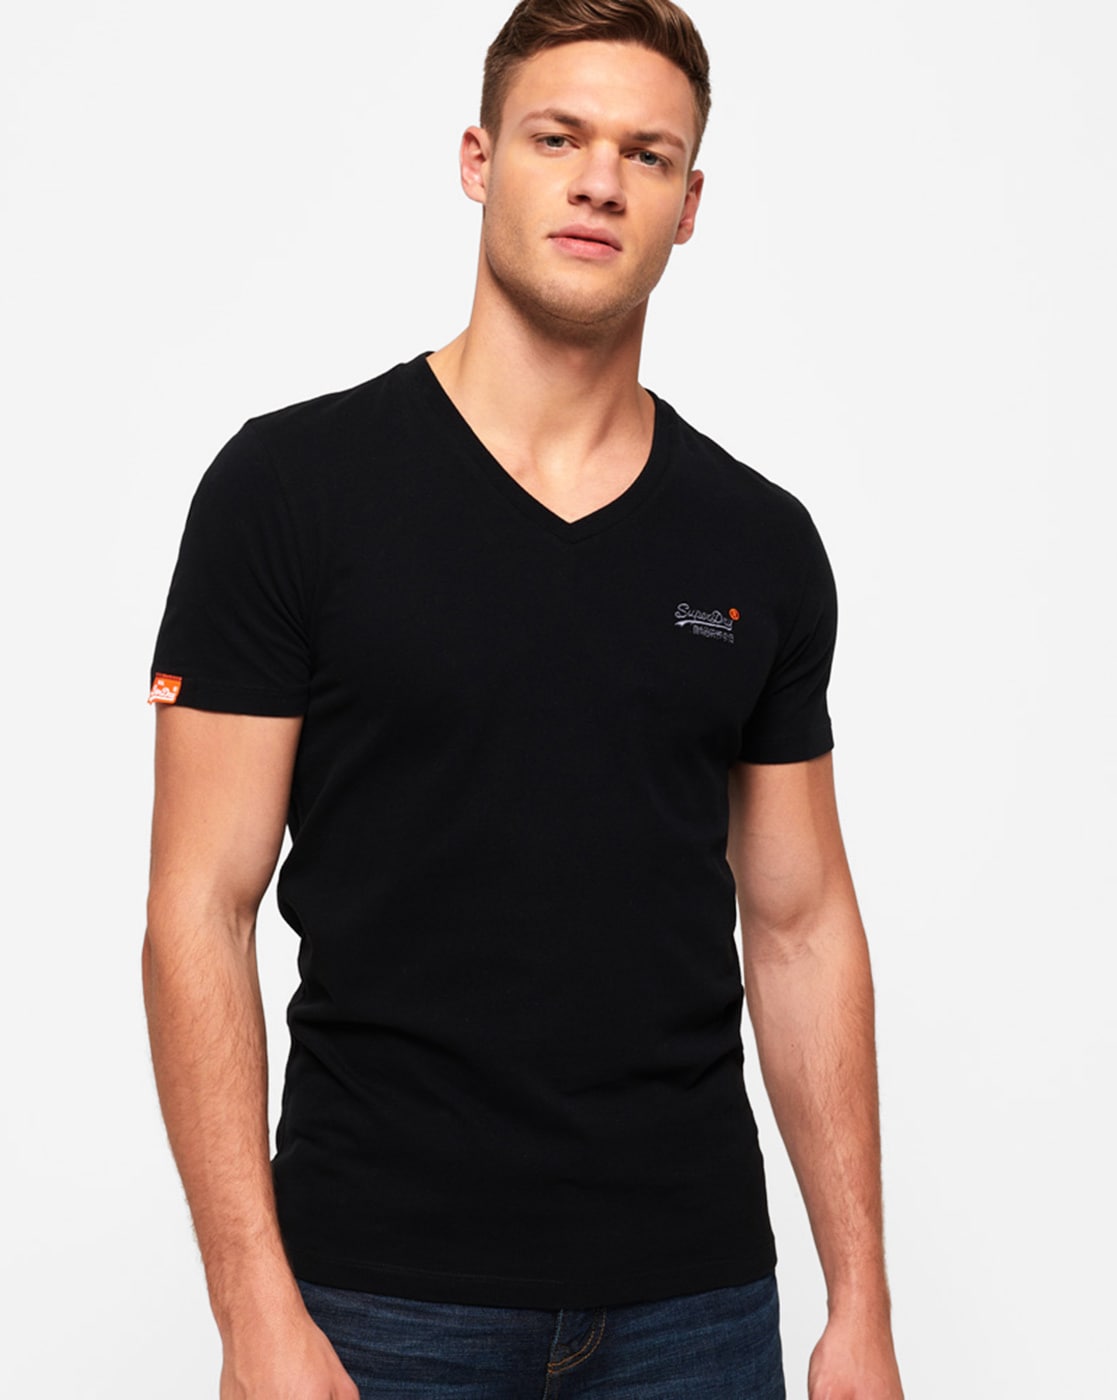 Buy Black Tshirts Men by Online Ajio.com